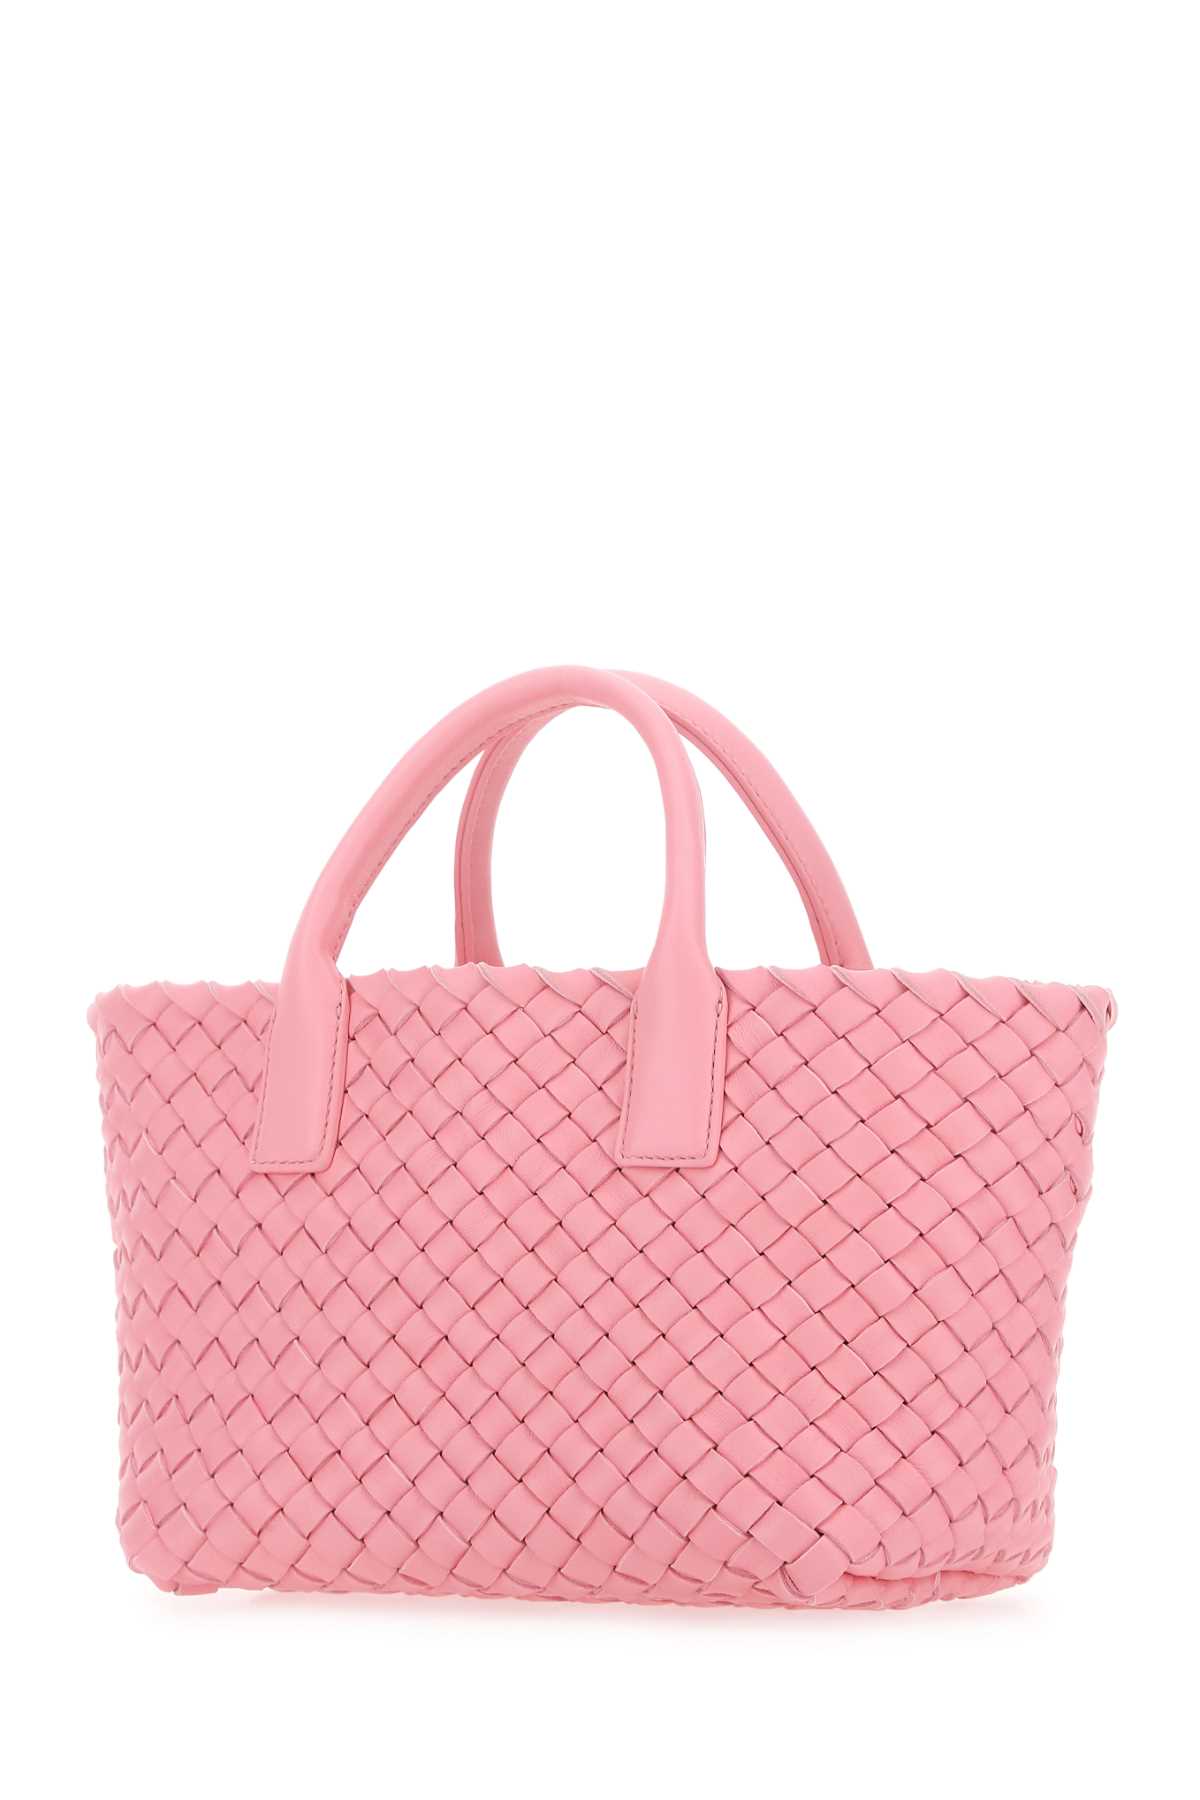 Bottega Veneta Pink Leather Mini Cabat Handbag